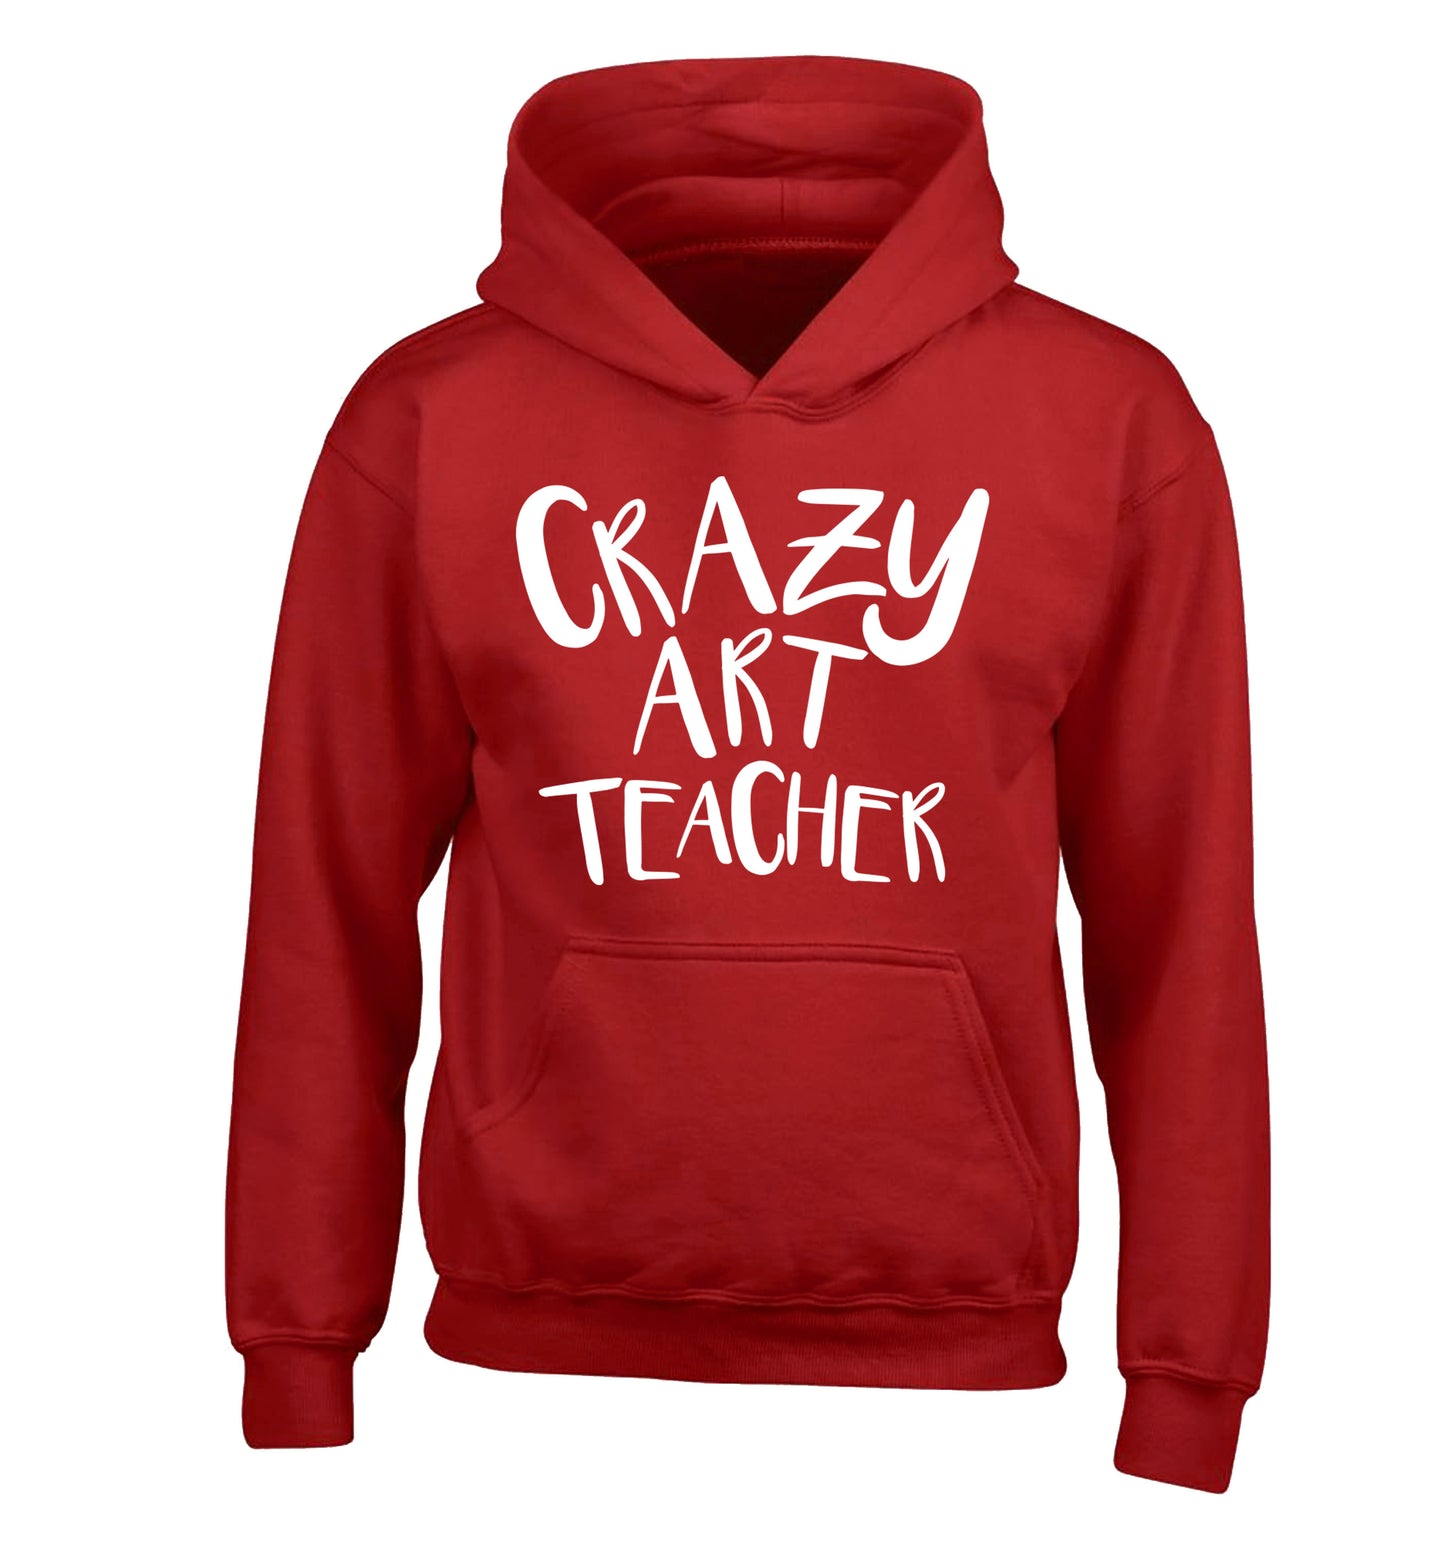 Crazy art teacher children's red hoodie 12-13 Years